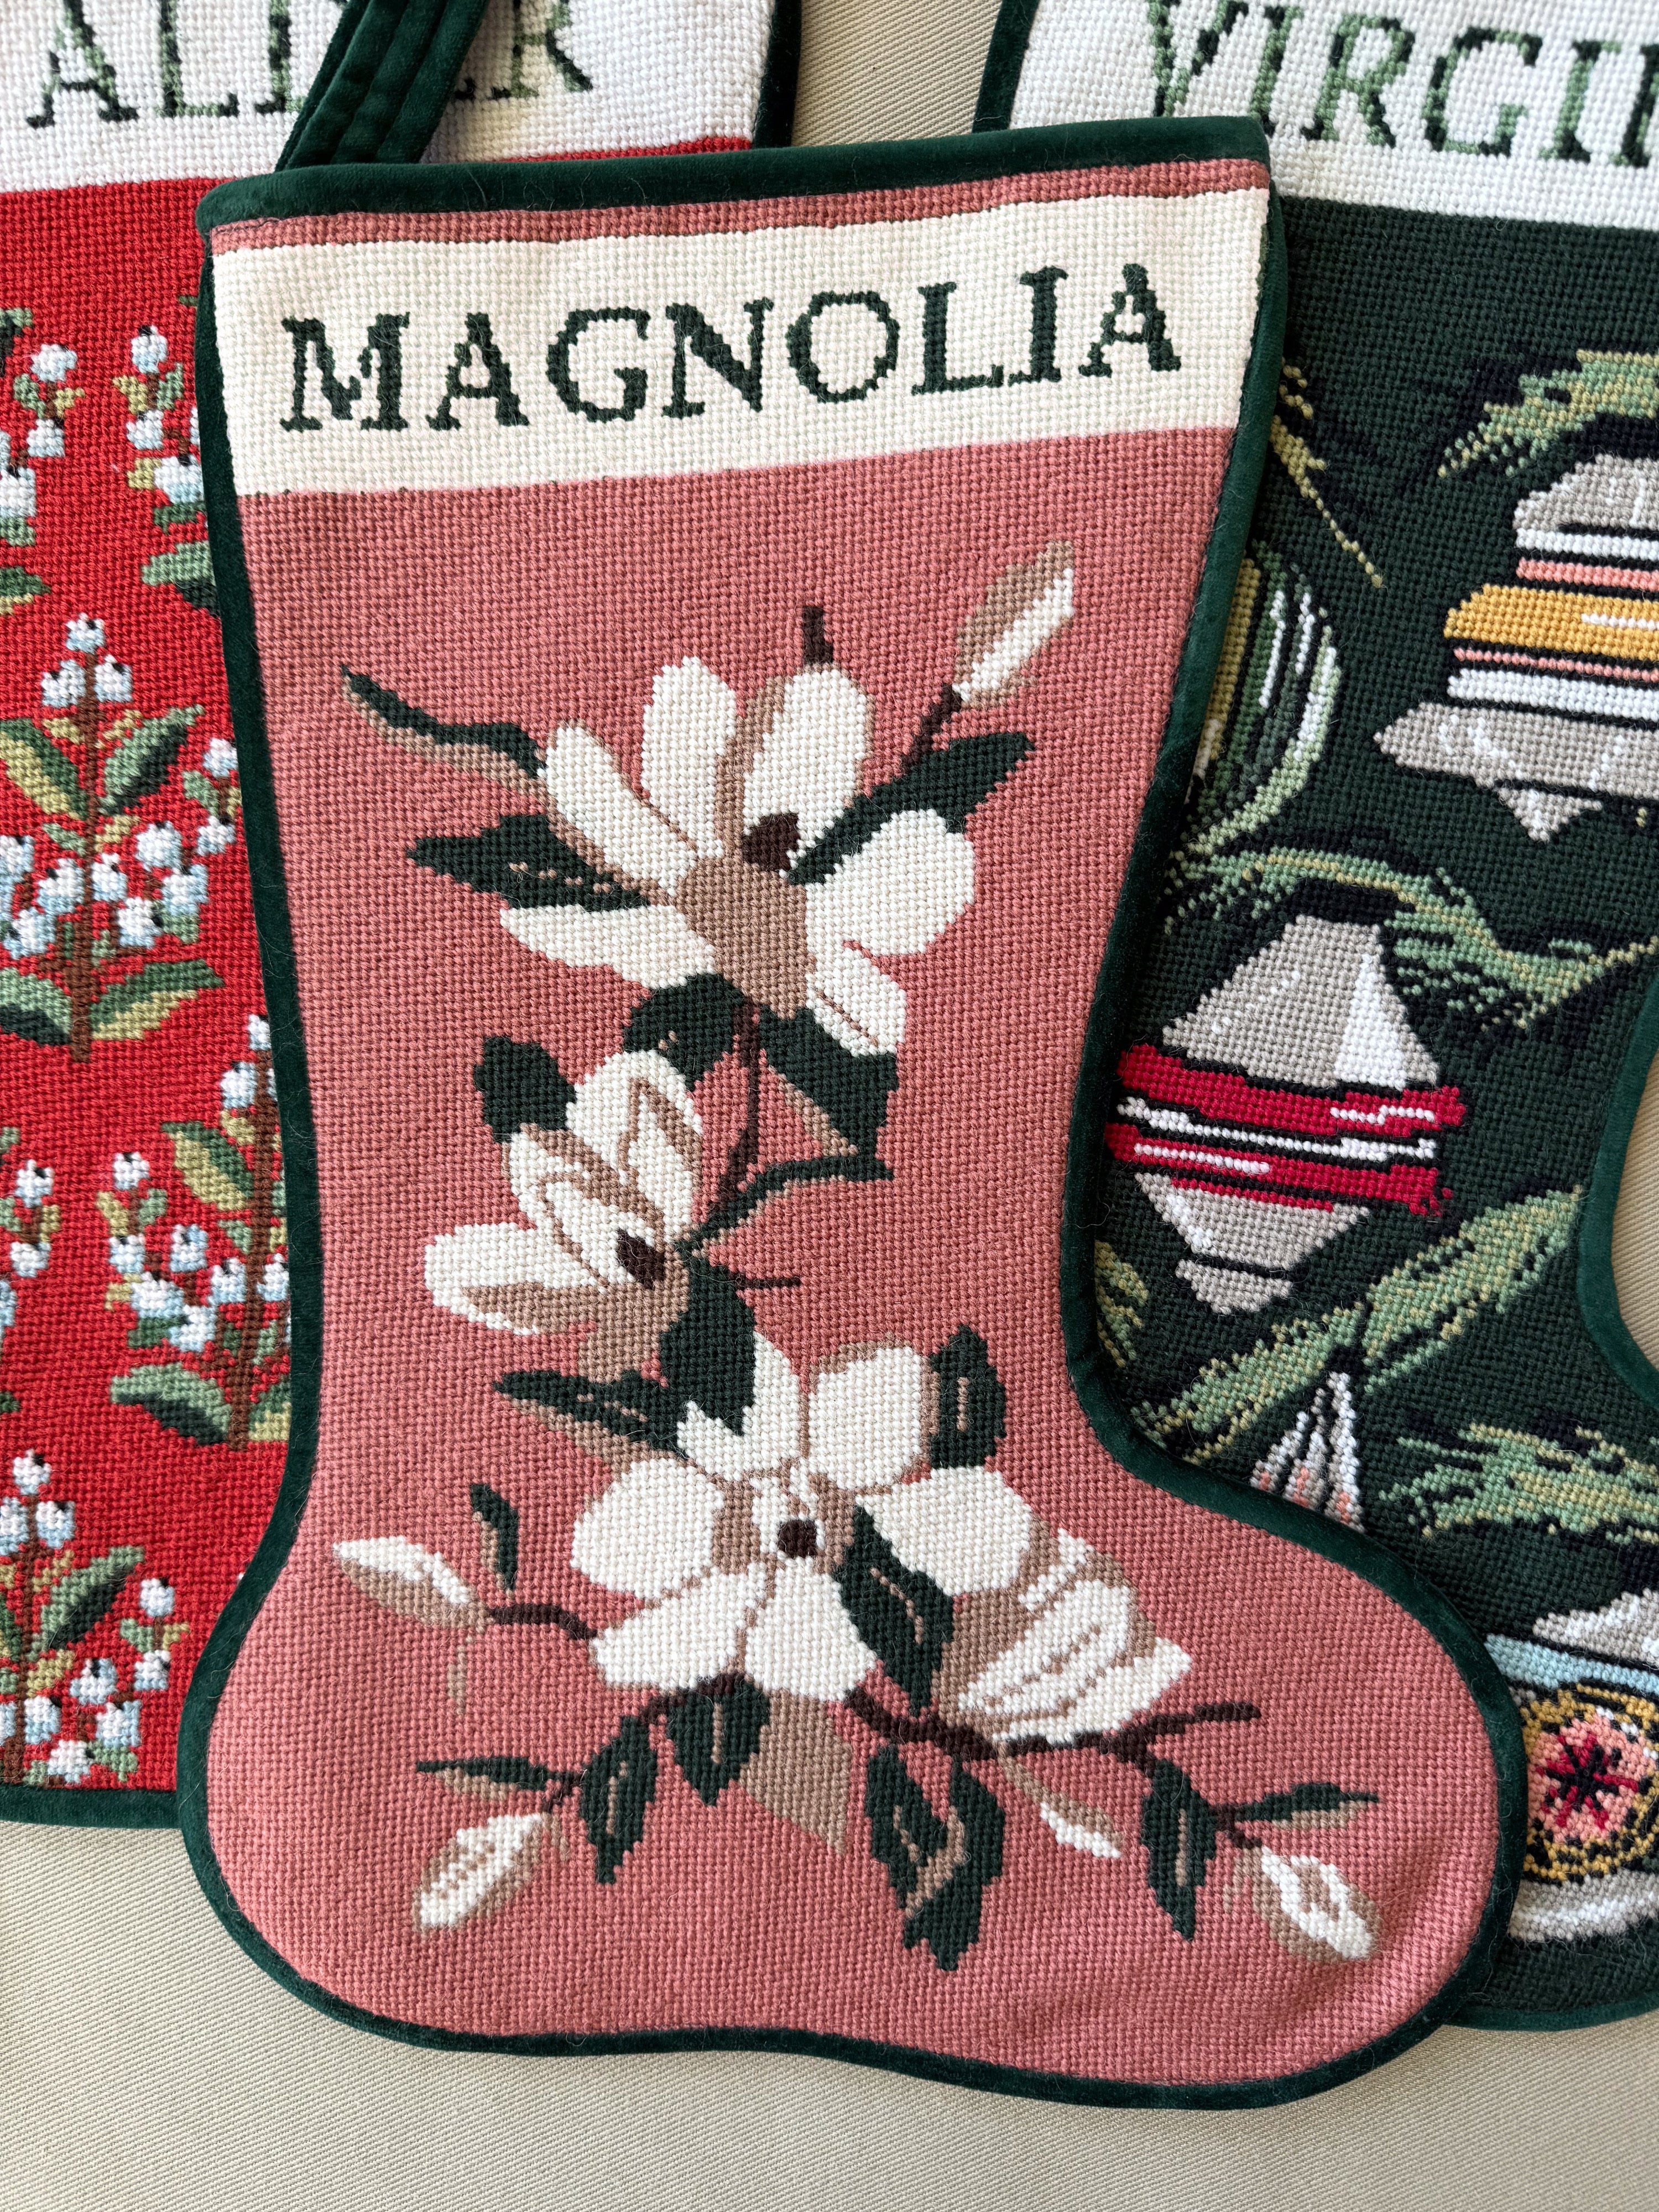 spider-spun_fully-stitched-needlepoint-stockings_magnolia_1.jpg